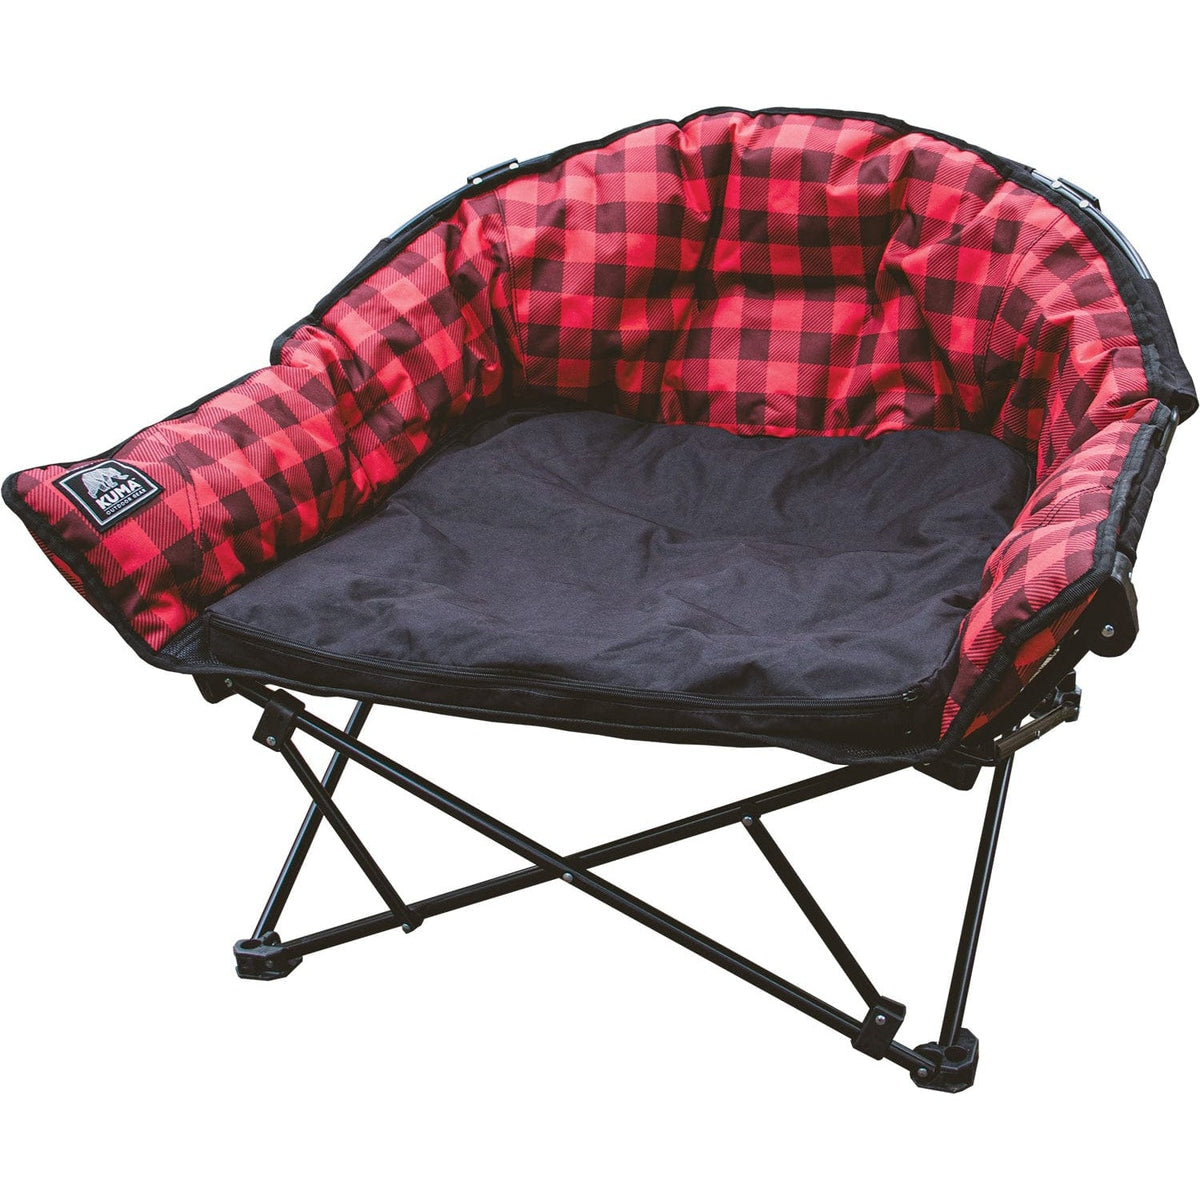 Kuma Outdoor Gear Not Qualified for Free Shipping Kuma Outdoor Gear Lazy Dog Bed #KM-DG-RPB